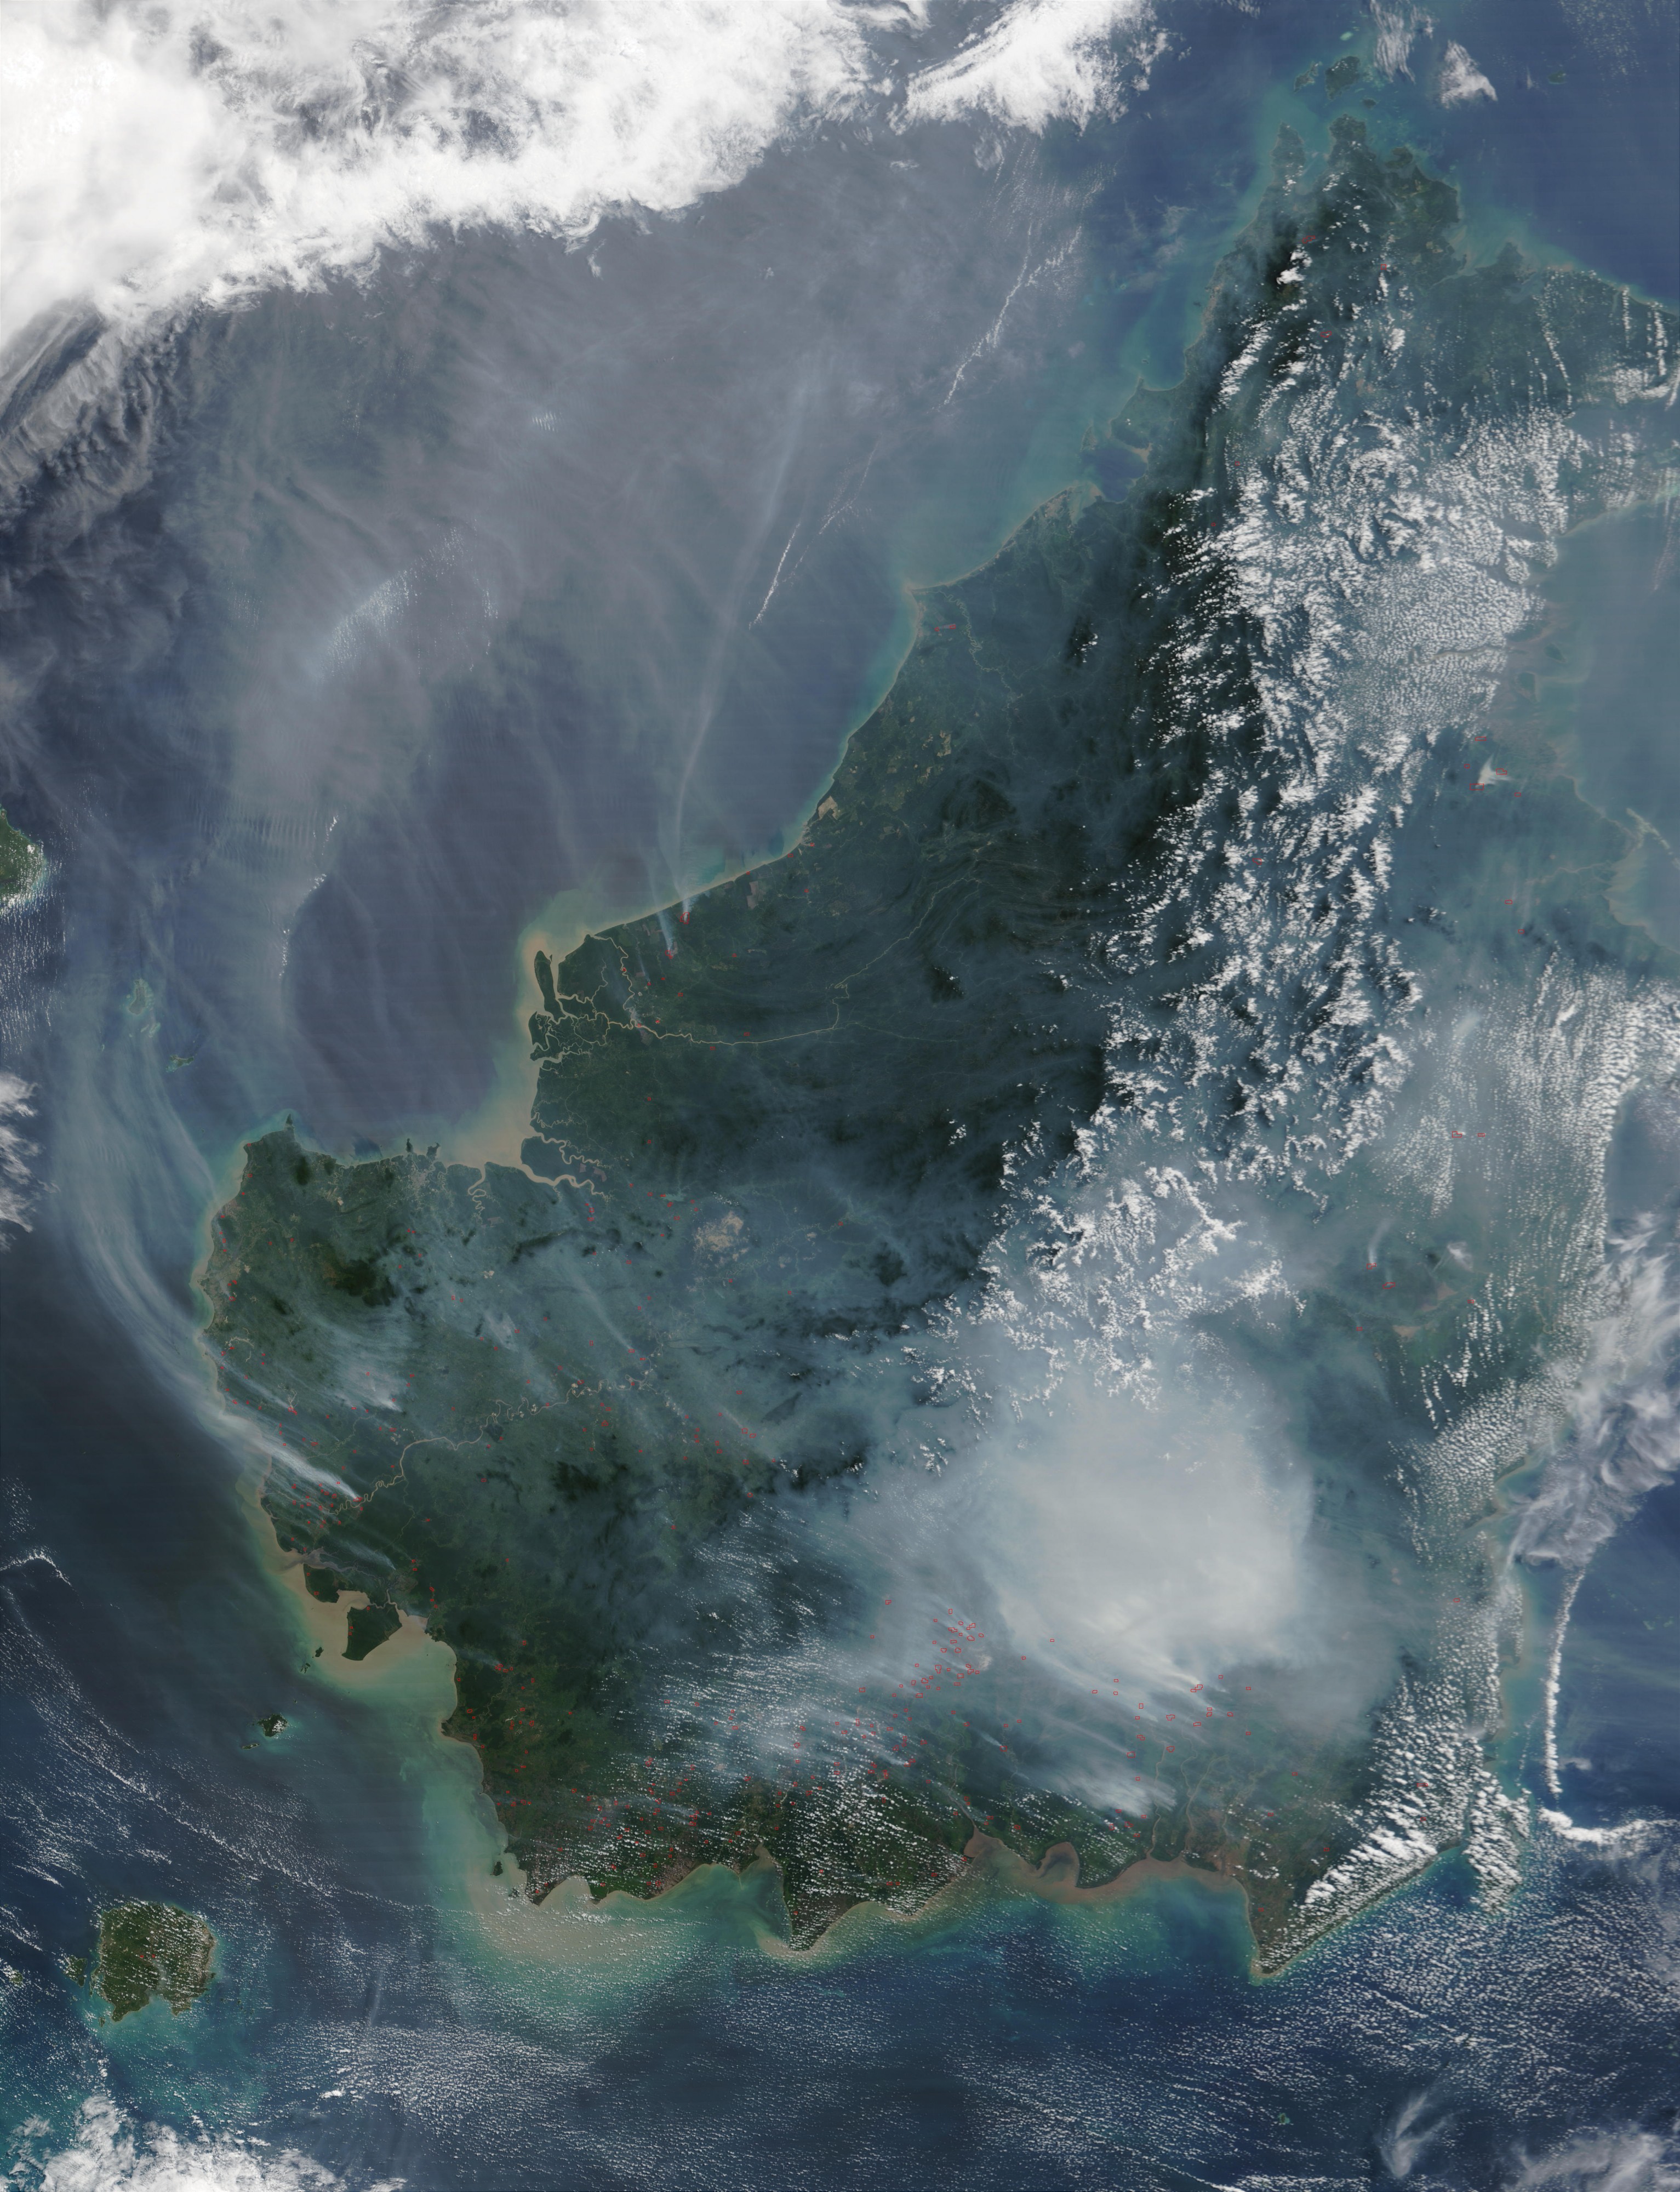 Borneo fires and smoke, 2002